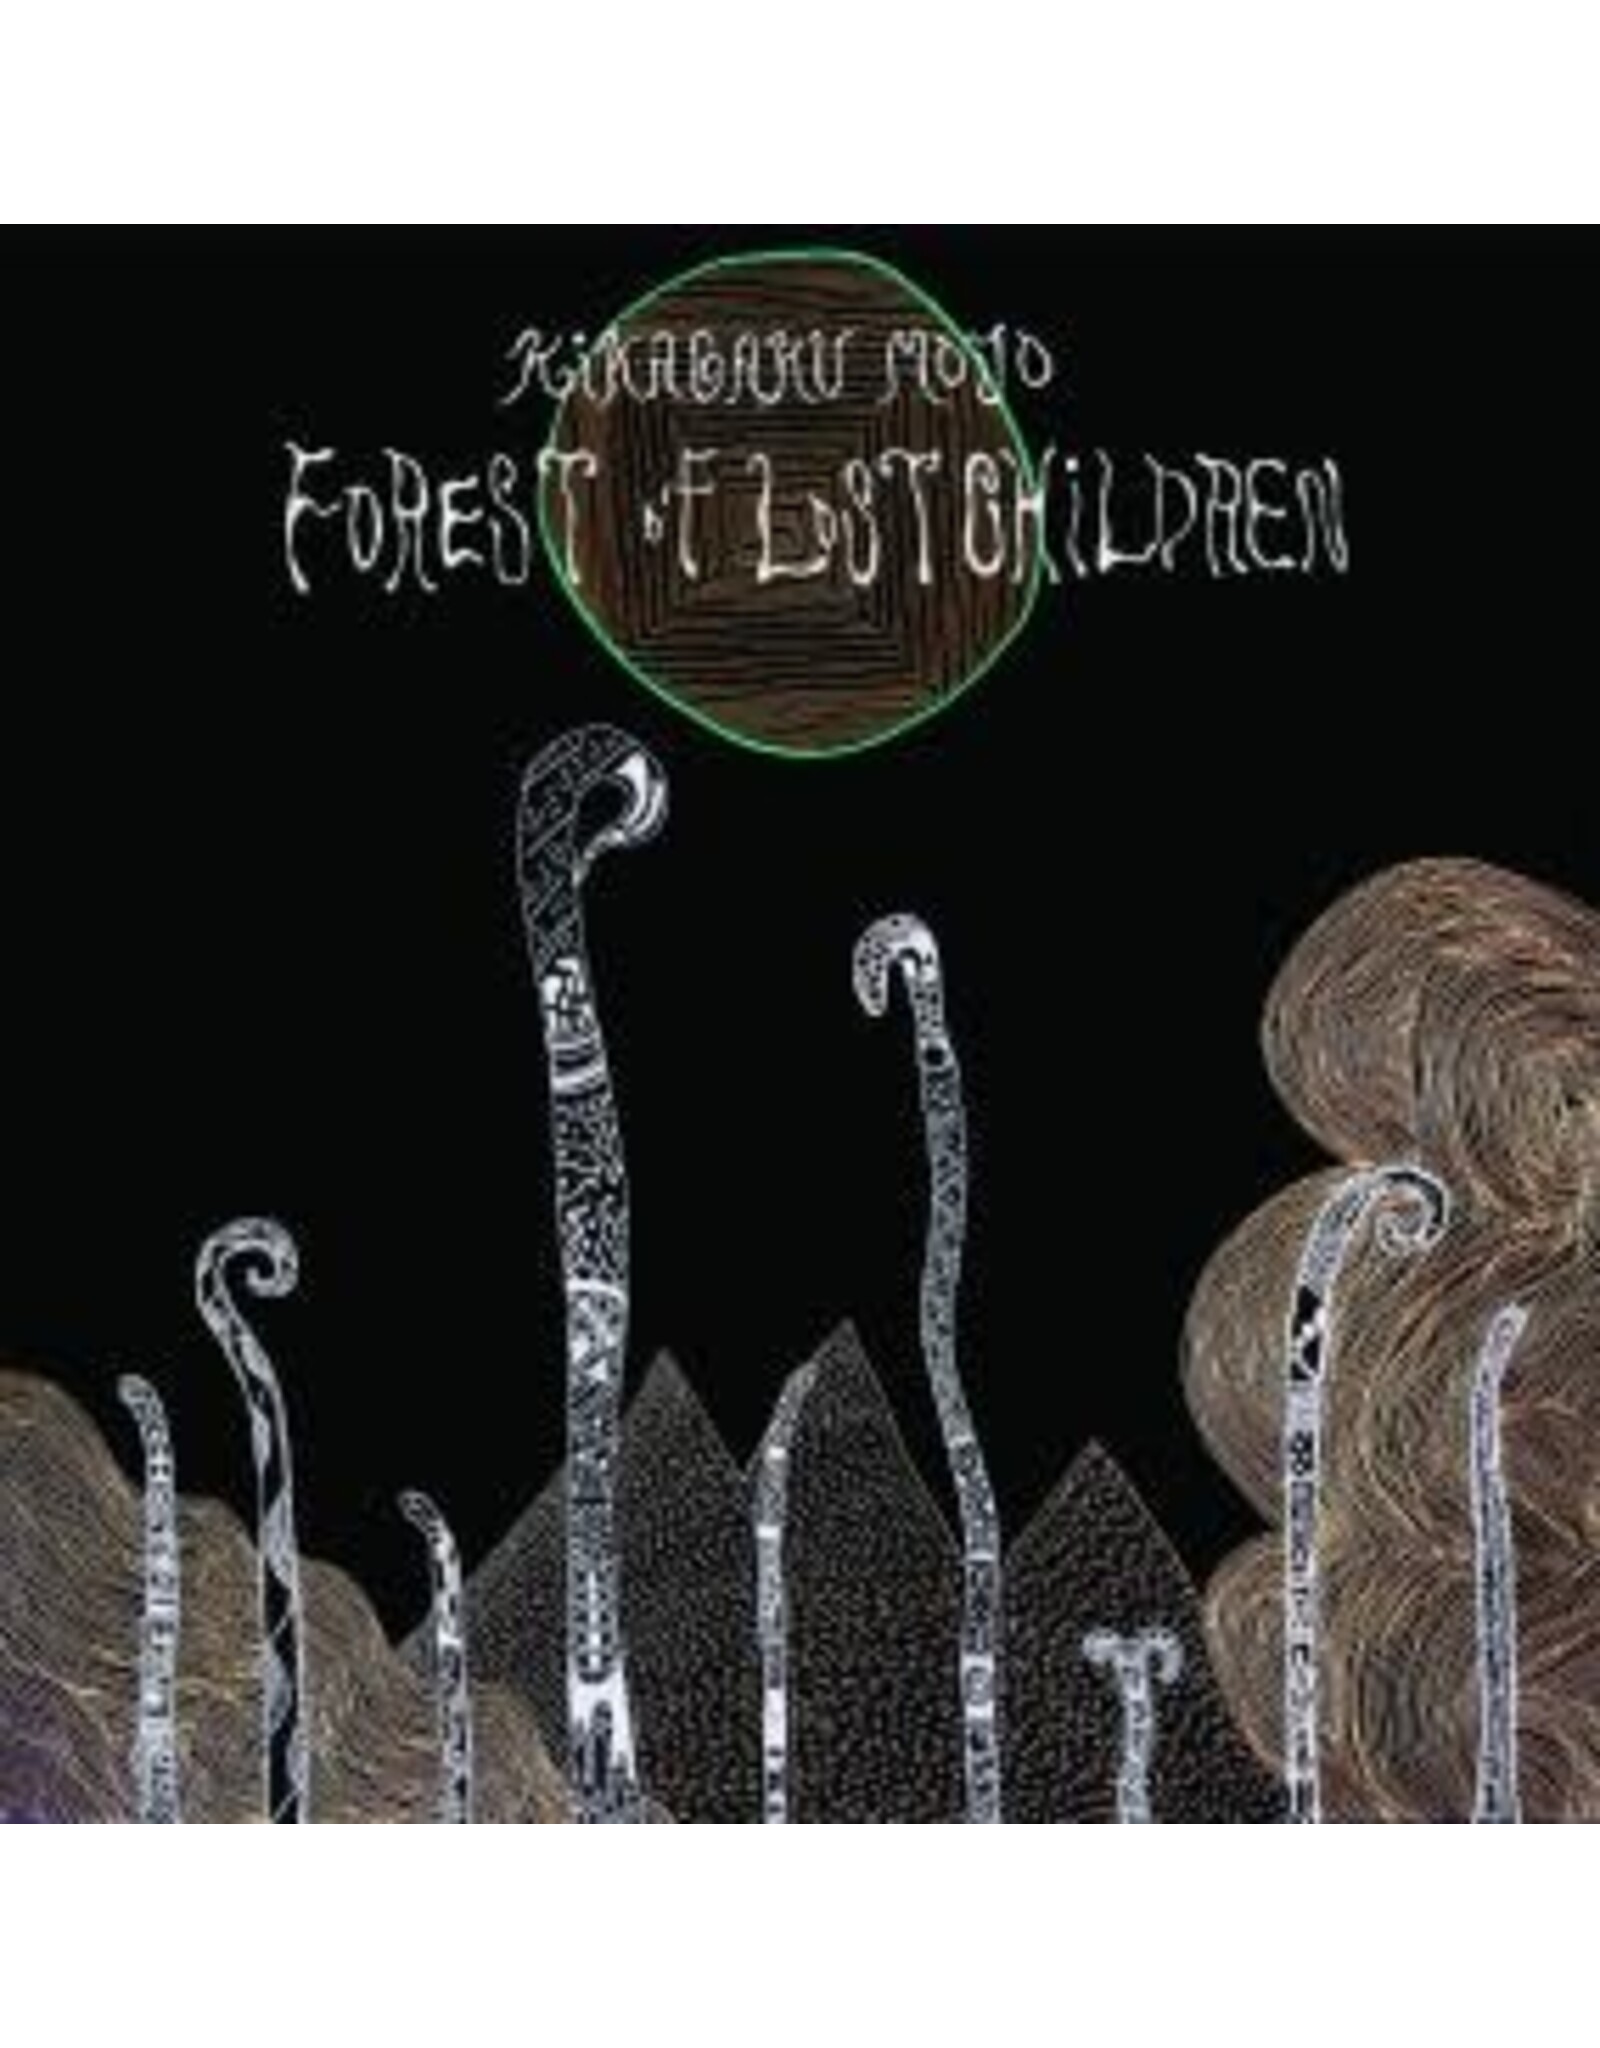 Guruguru Brain Kikagaku Moyo: Forest of Lost Children LP